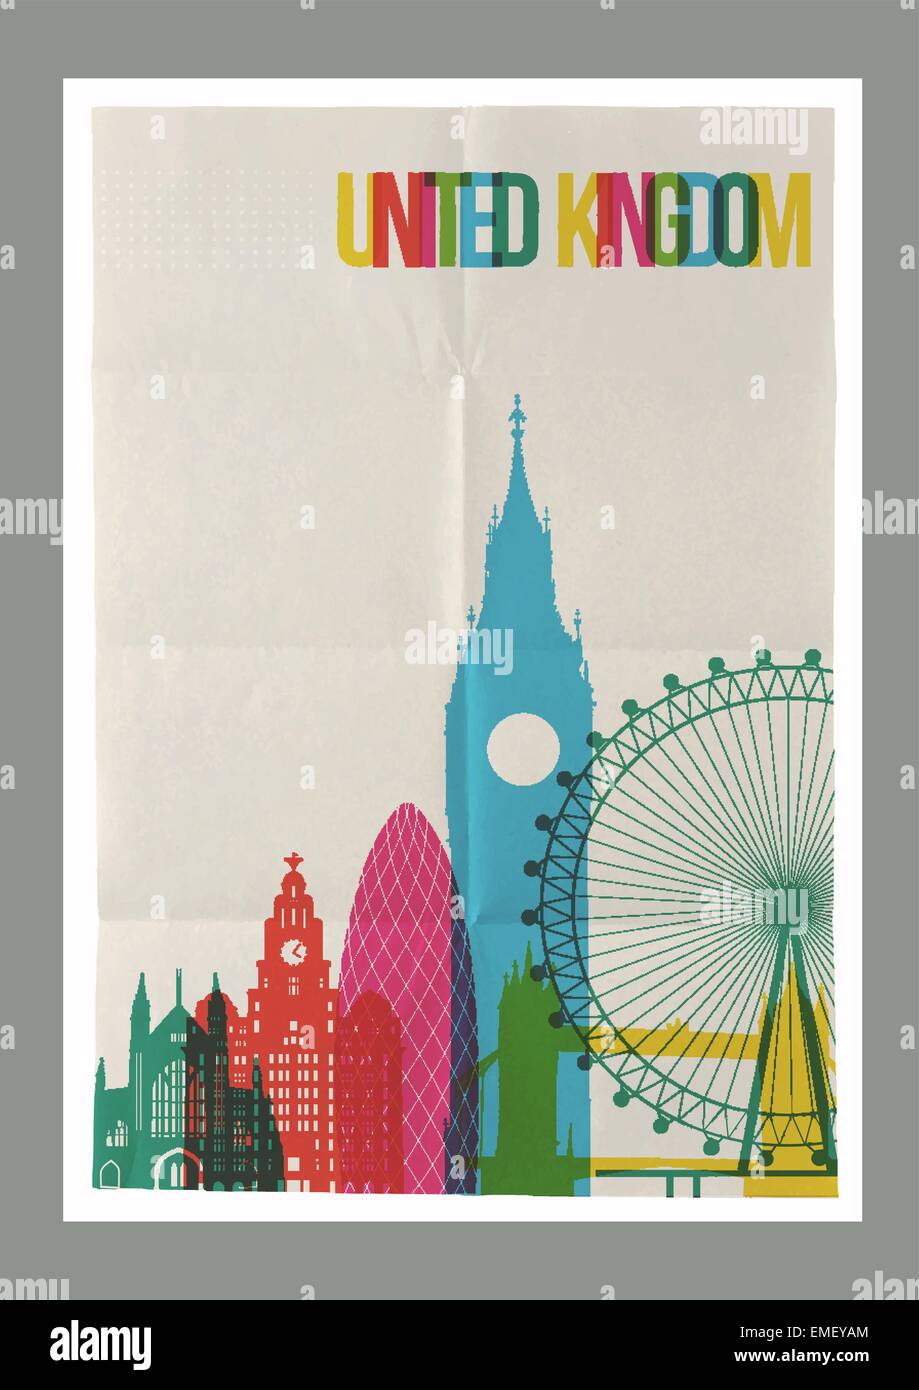 Travel United Kingdom landmarks skyline vintage poster Stock Vector